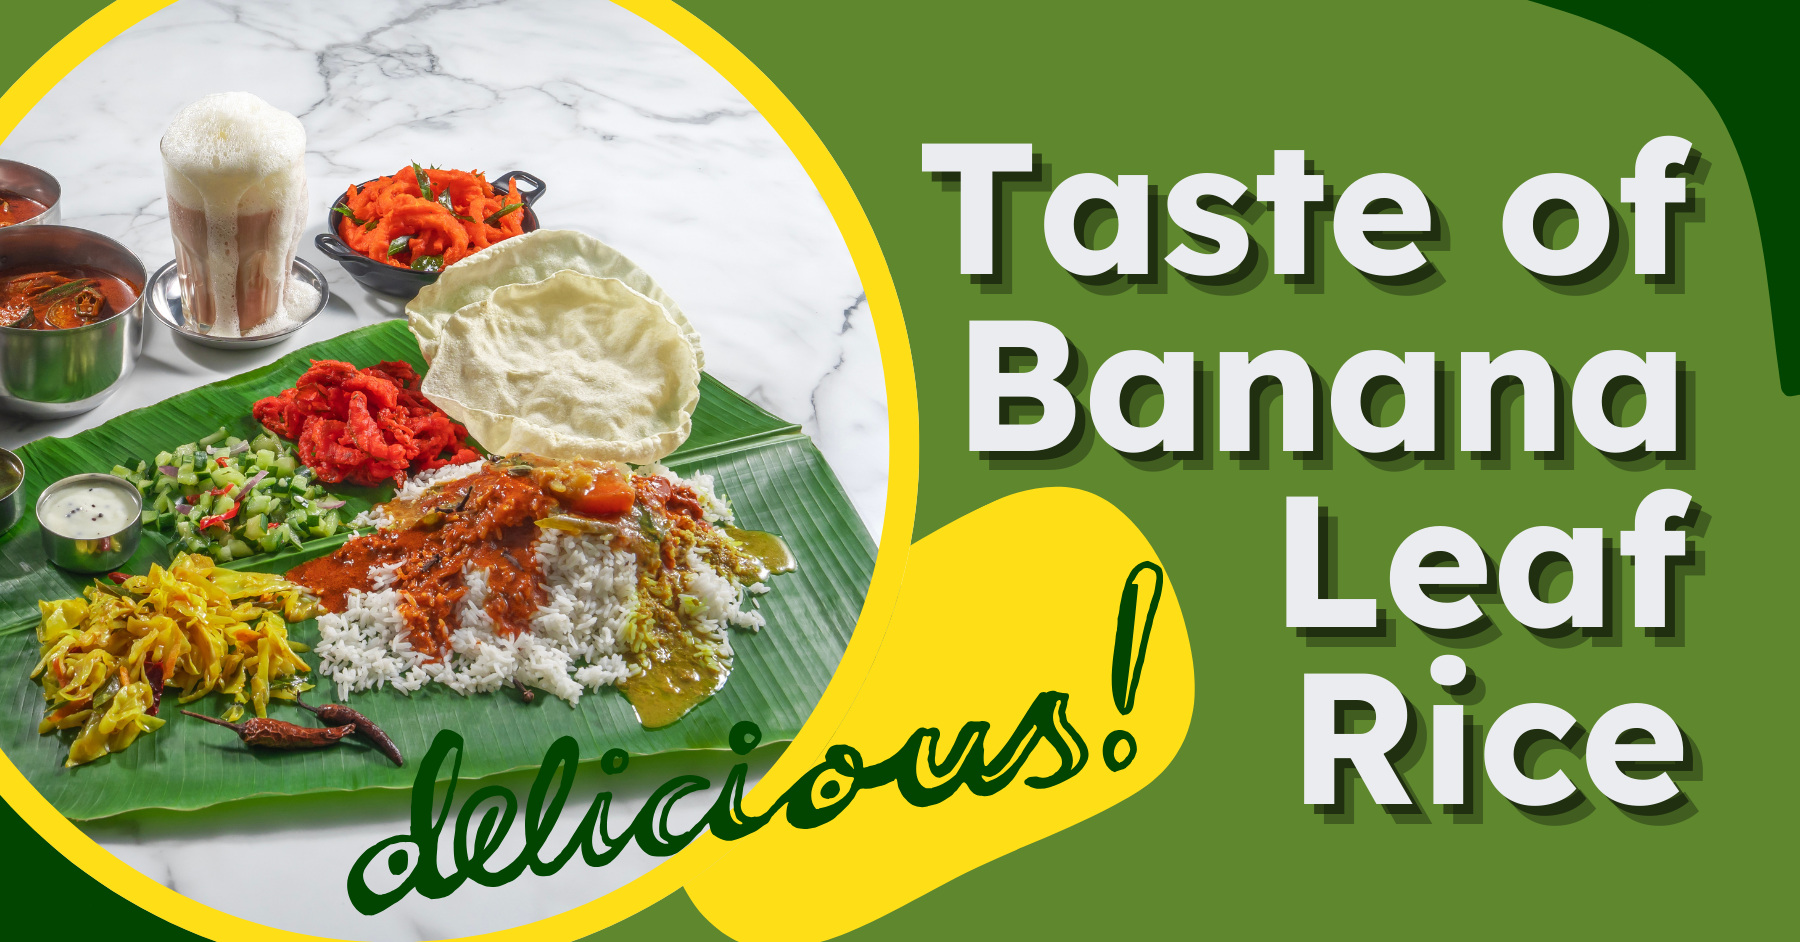 [BananaBro] Journey Through Banana Leaf Rice Taste, taste of banana leaf rice